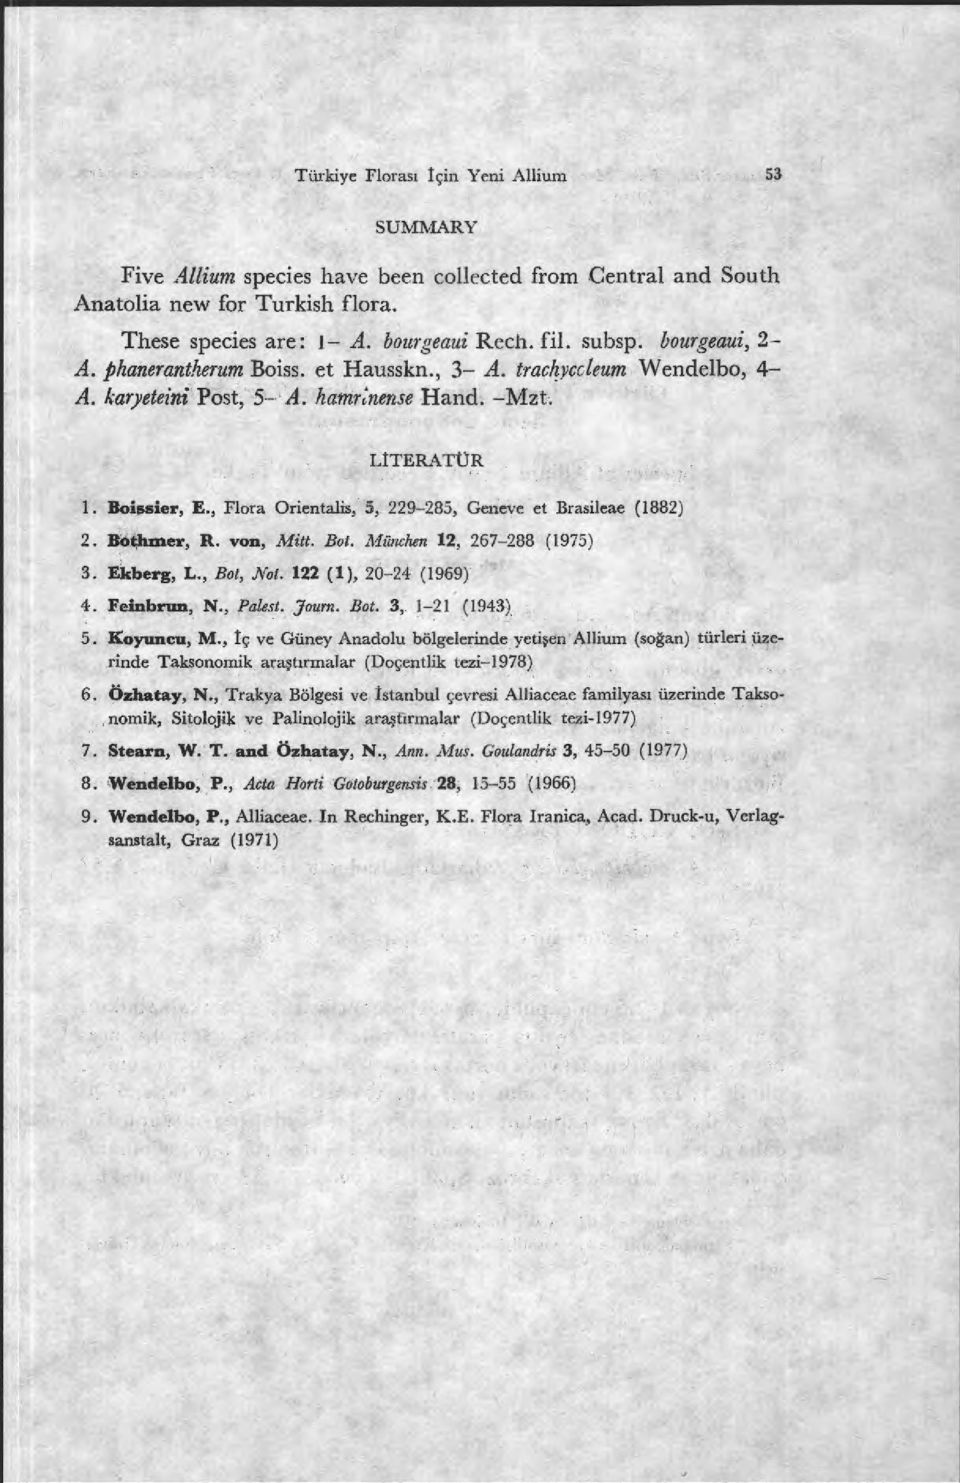 , Flora Orientalis, 5, 229-285, Geneve et Brasileae (1882) 2. Bothmer, R. von, Mitt. Bot. München 12, 267-288 (1975) 3. Ekberg, L., Bot, Not. 122 (1), 20-24 (1969) 4. Feinbrun, N., Balesi. Journ. Bot. 3, 1-21 (1943) 5.